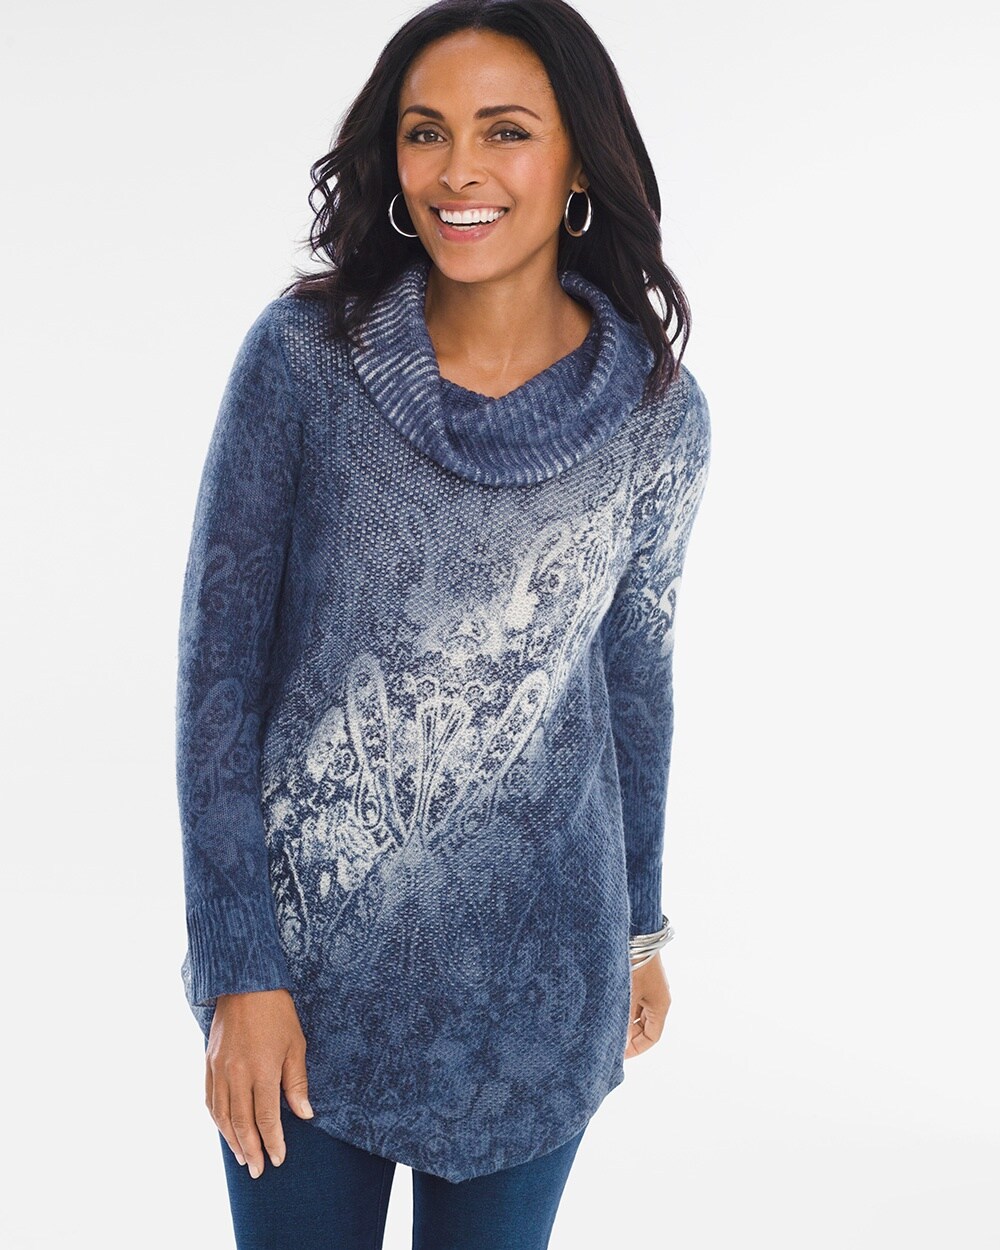 Zenergy Ombre Paisley Sweater